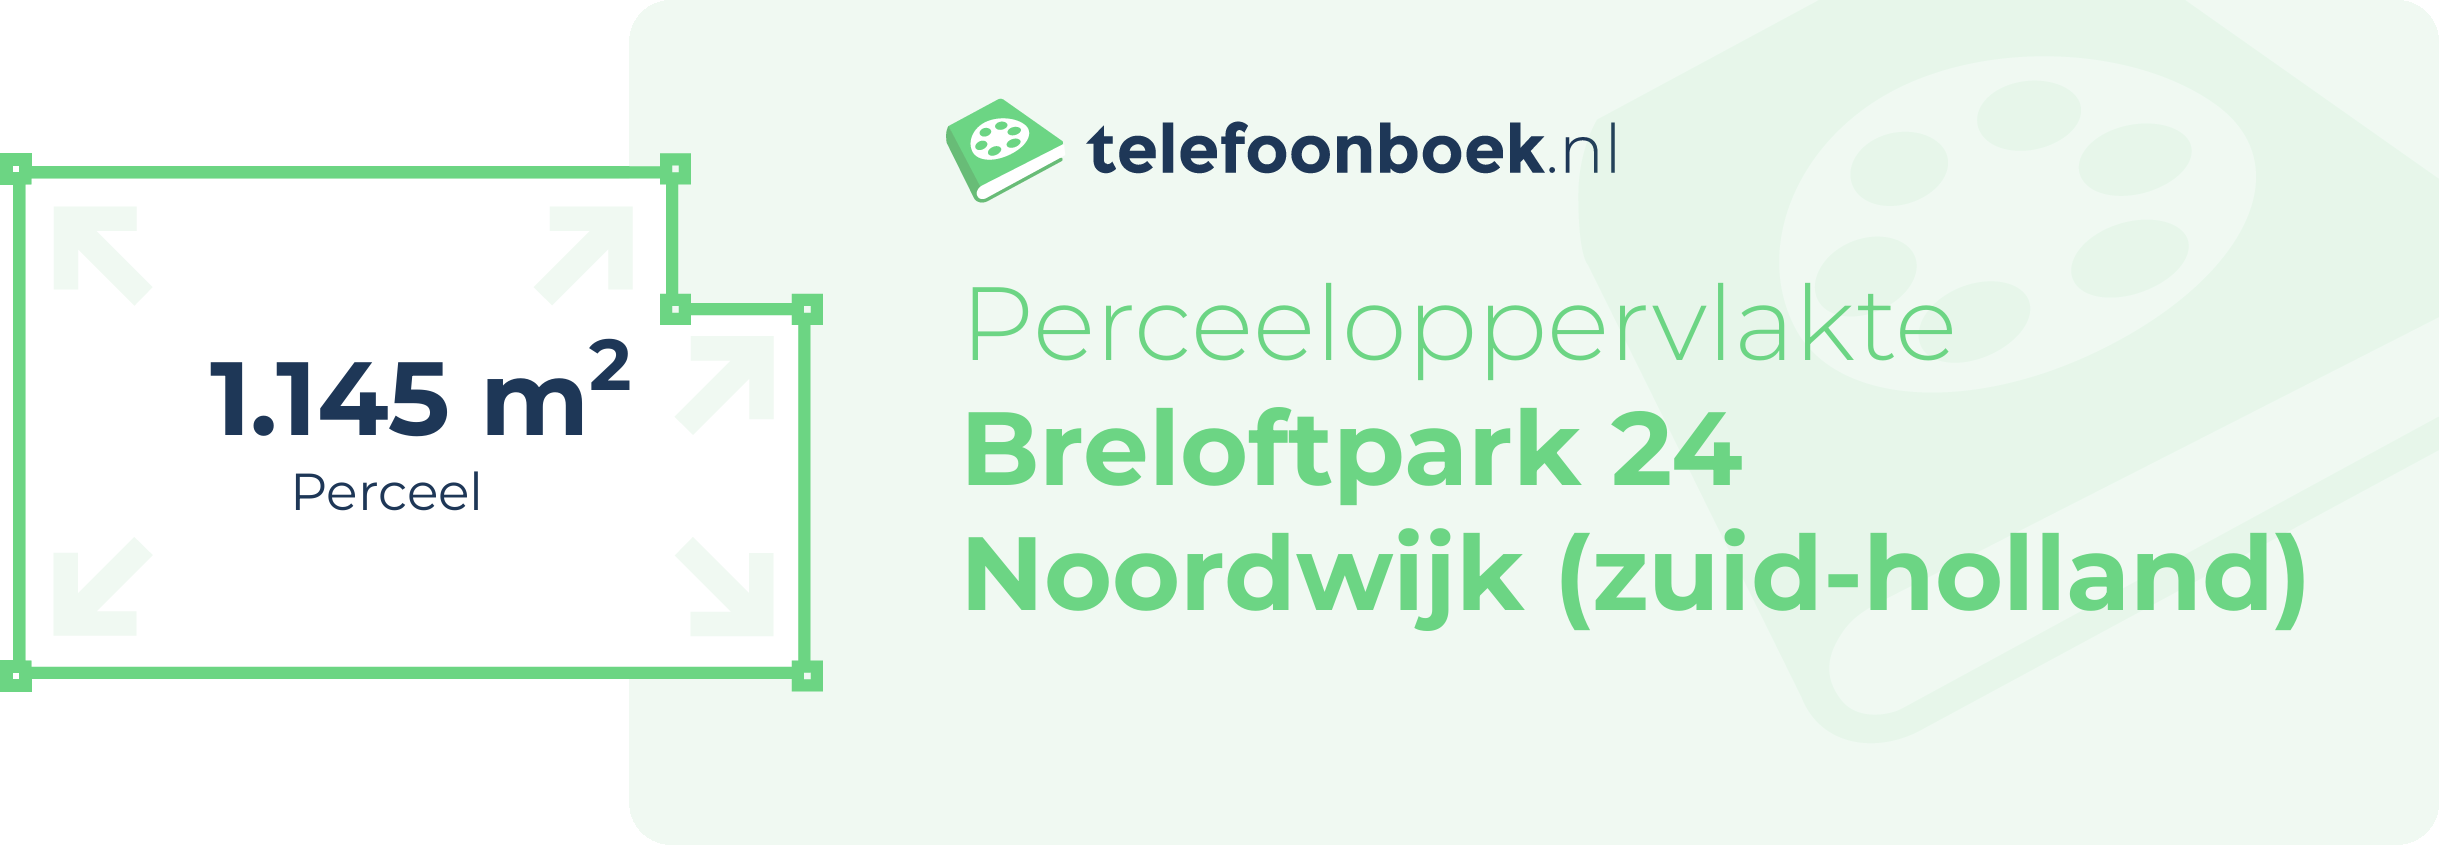 Perceeloppervlakte Breloftpark 24 Noordwijk (Zuid-Holland)